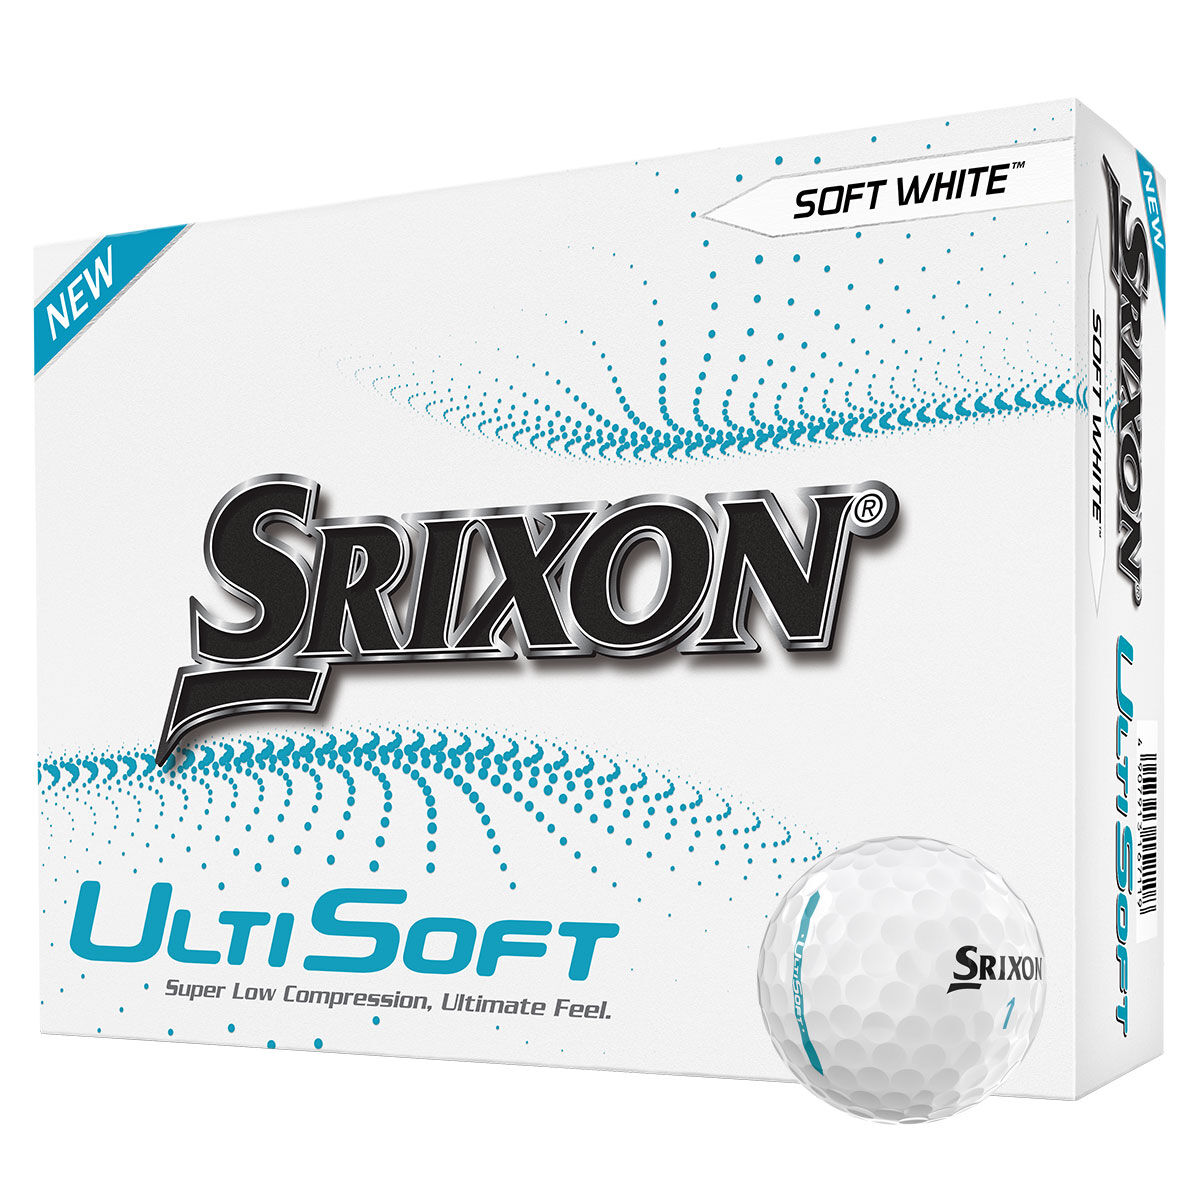 Srixon Golf Ball, White UltiSoft 12 s Pack | American Golf, one size